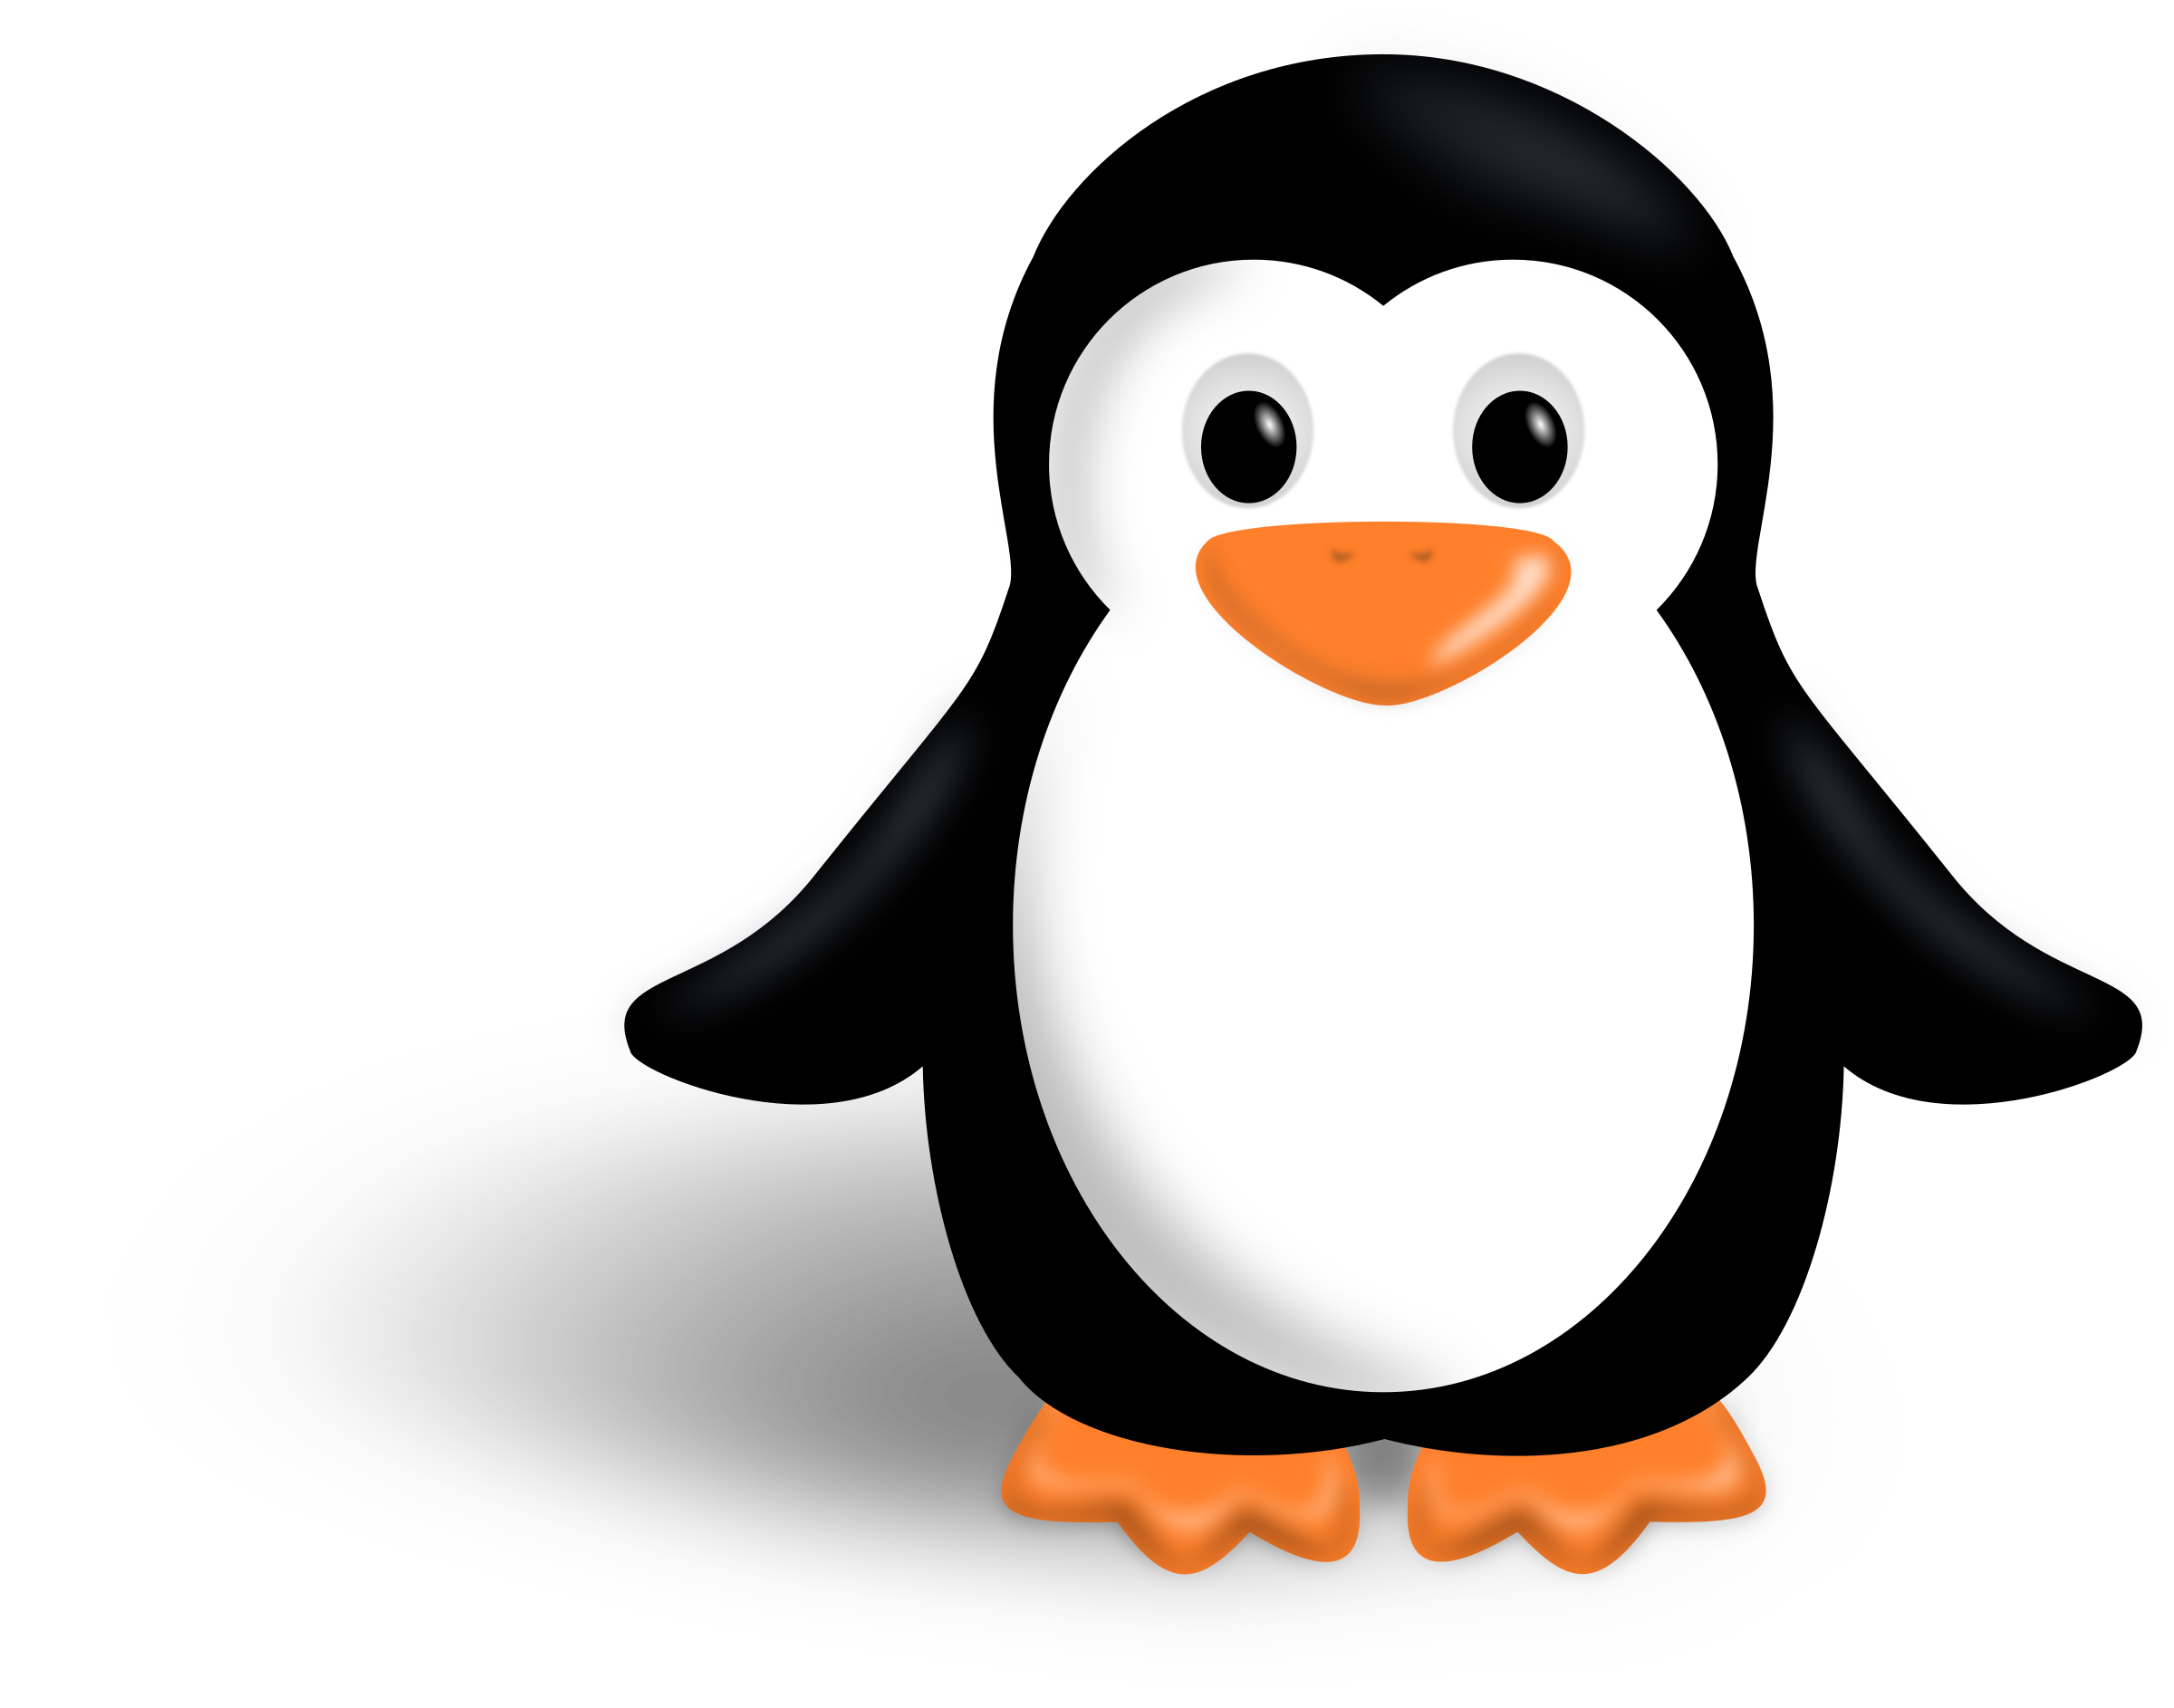 Free vector graphic: Penguin, Tux, Animal, Bird, Cute - Free Image on ...